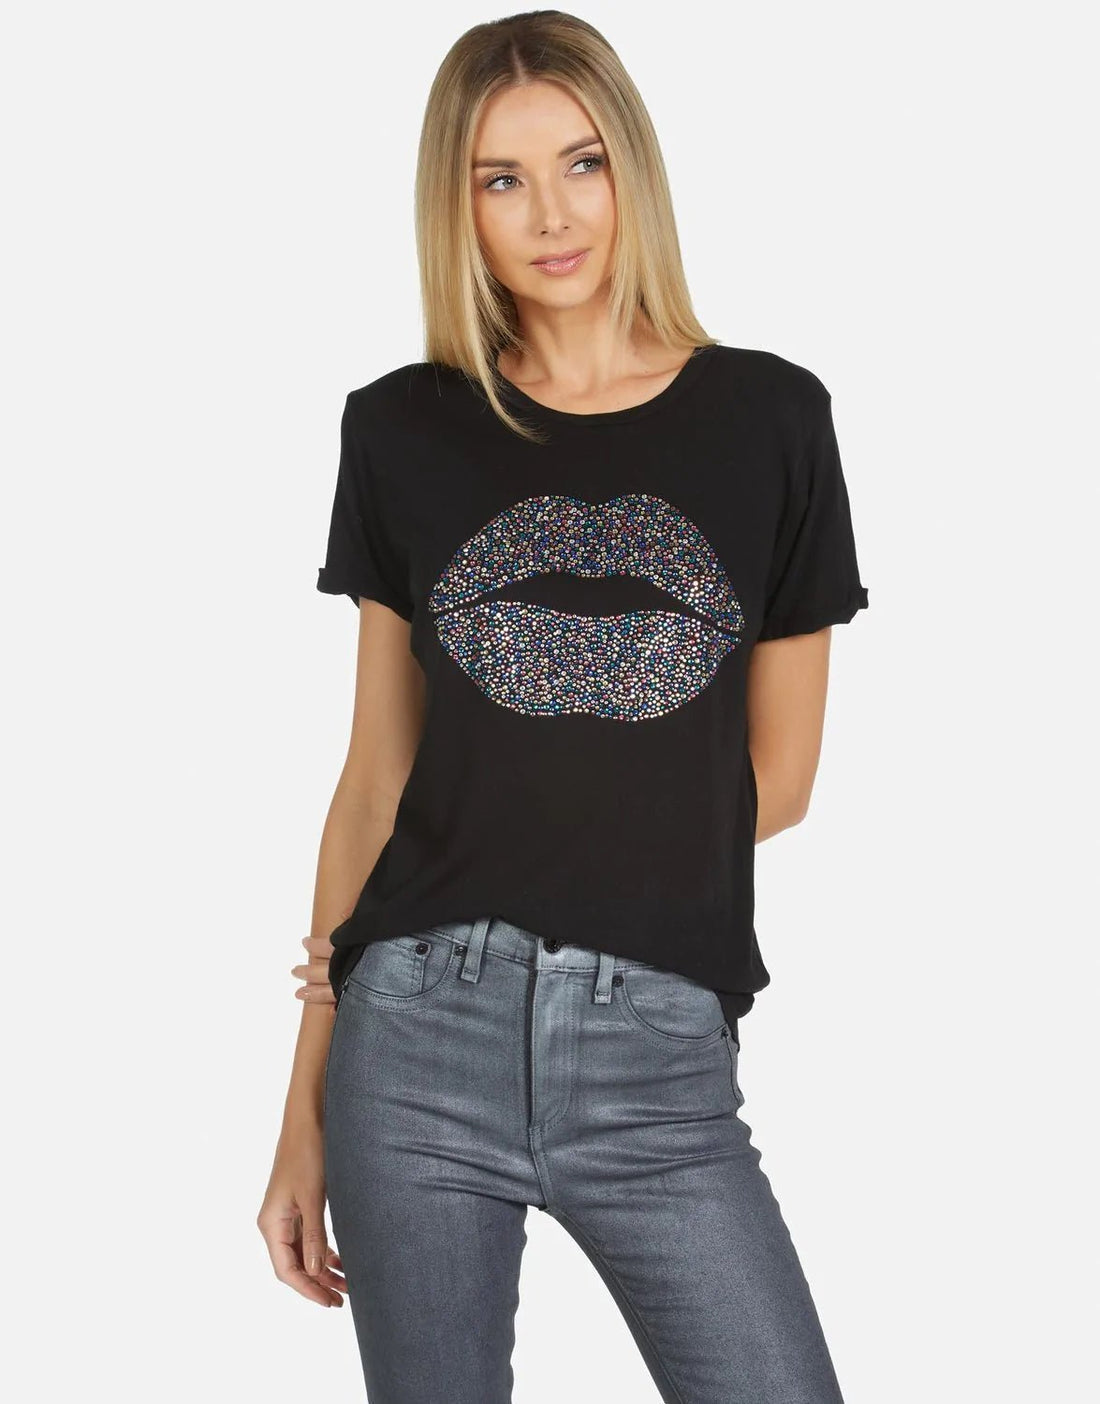 Shop Lauren Moshi Edda Crystal Sprinkle Lip T-Shirt - Premium T-Shirt from Lauren Moshi Online now at Spoiled Brat 